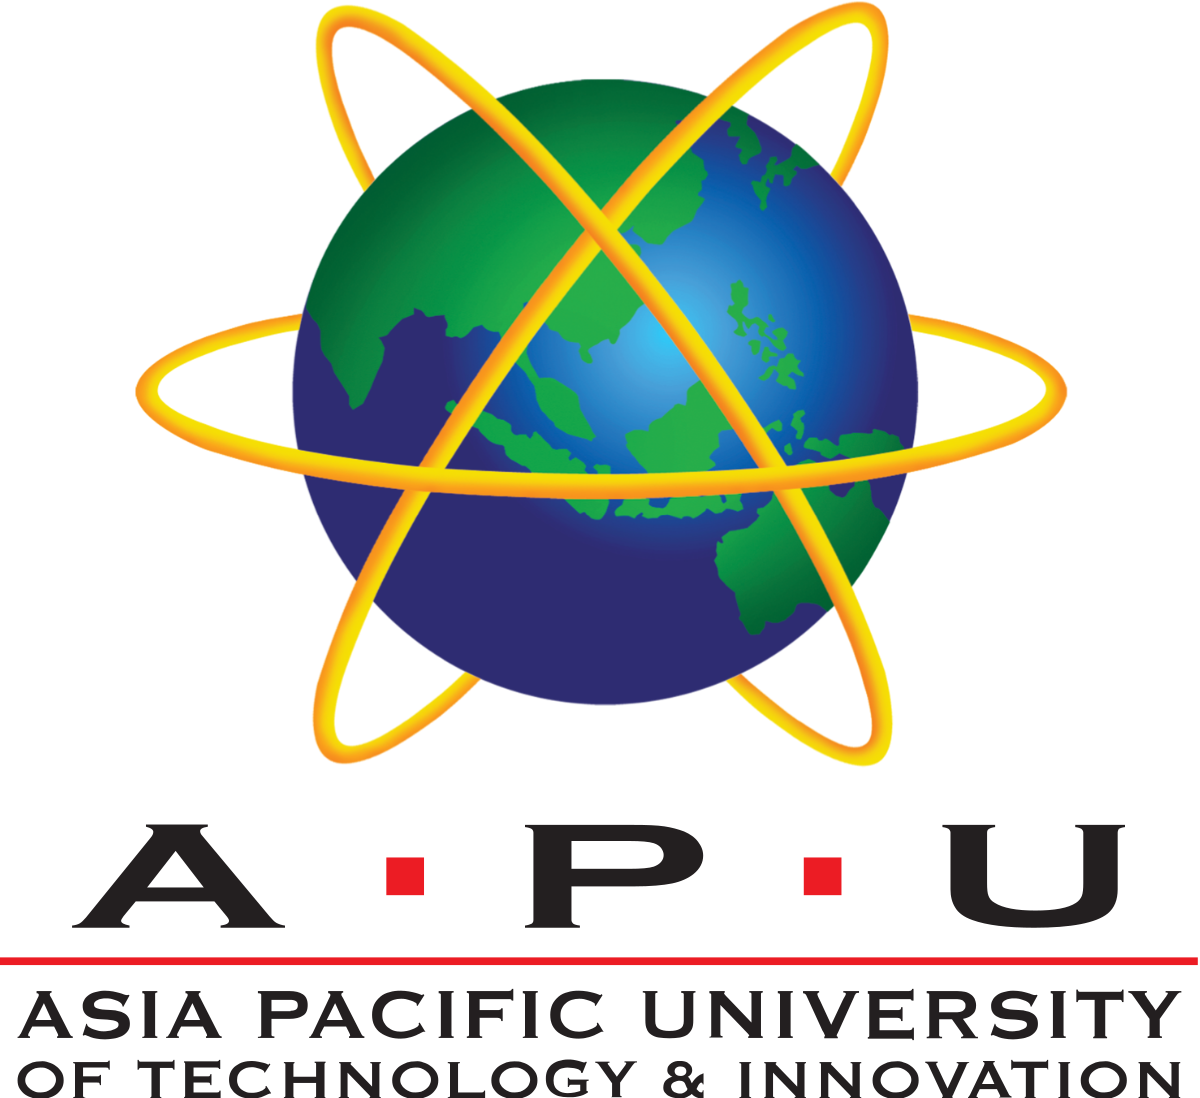 Asia Pacific University of Technology & Innovation - Wikipedia